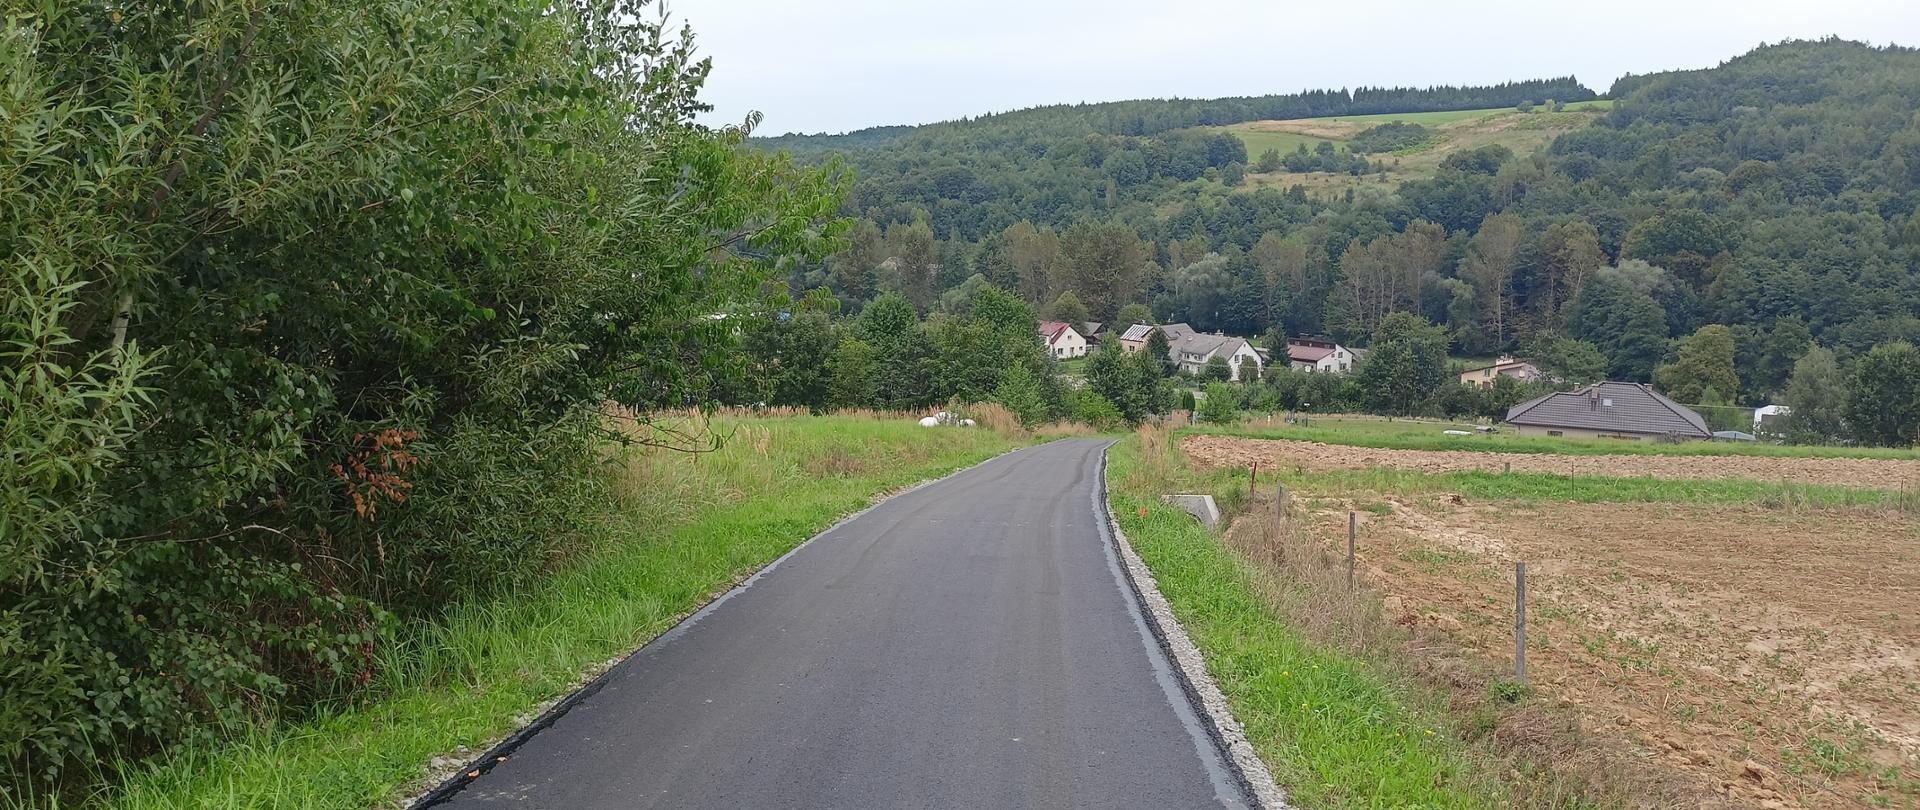 Droga Straszydle - Folwark